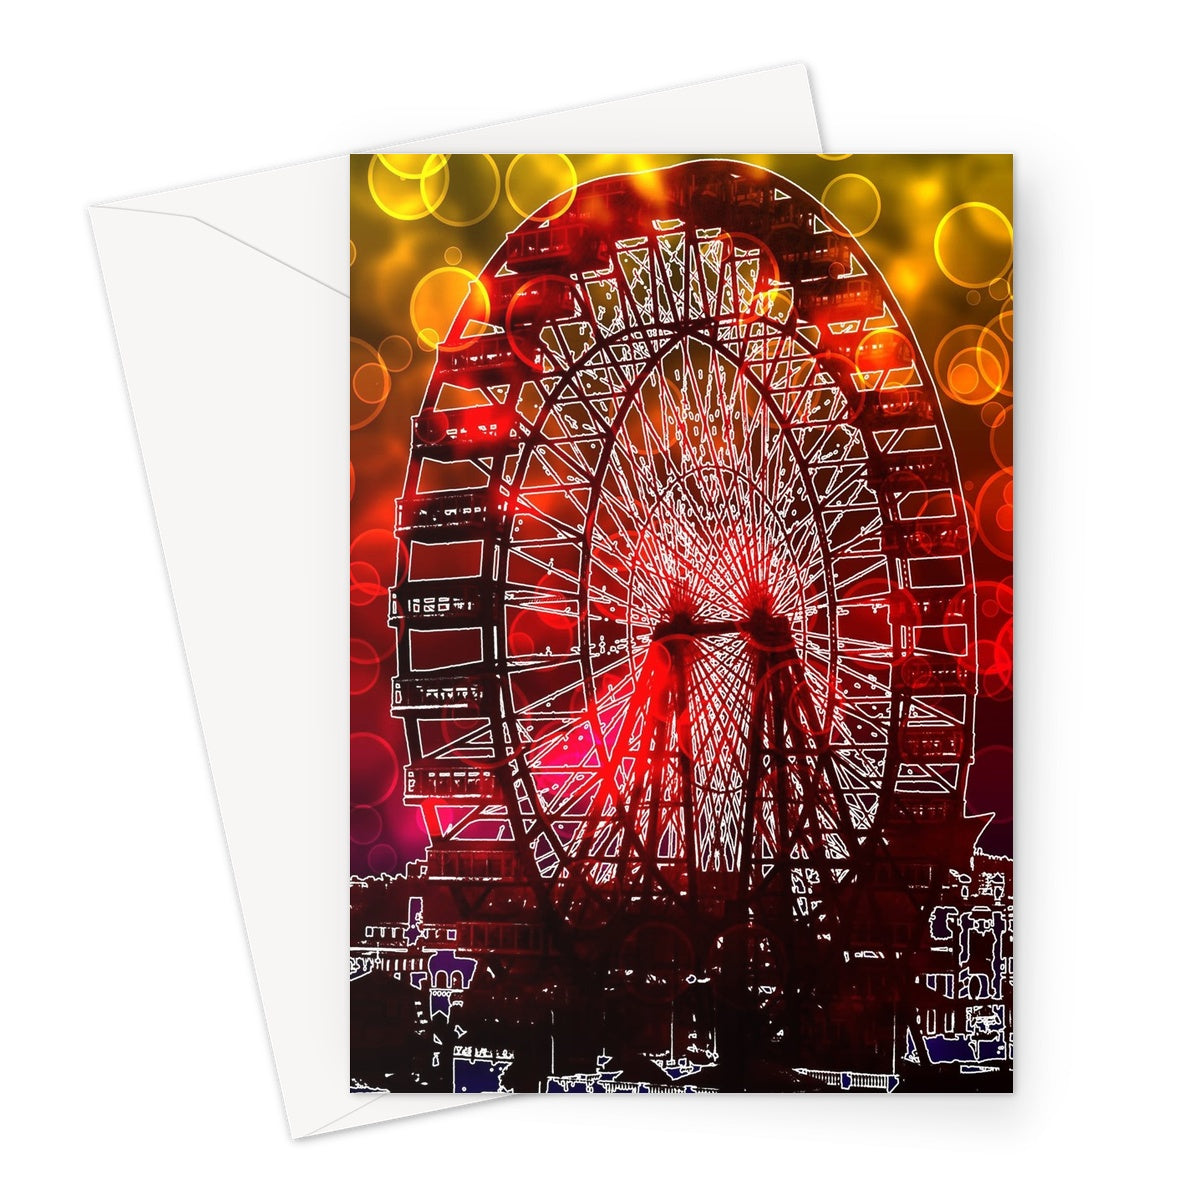 Bokeh Light Ferris Wheel Greeting Card